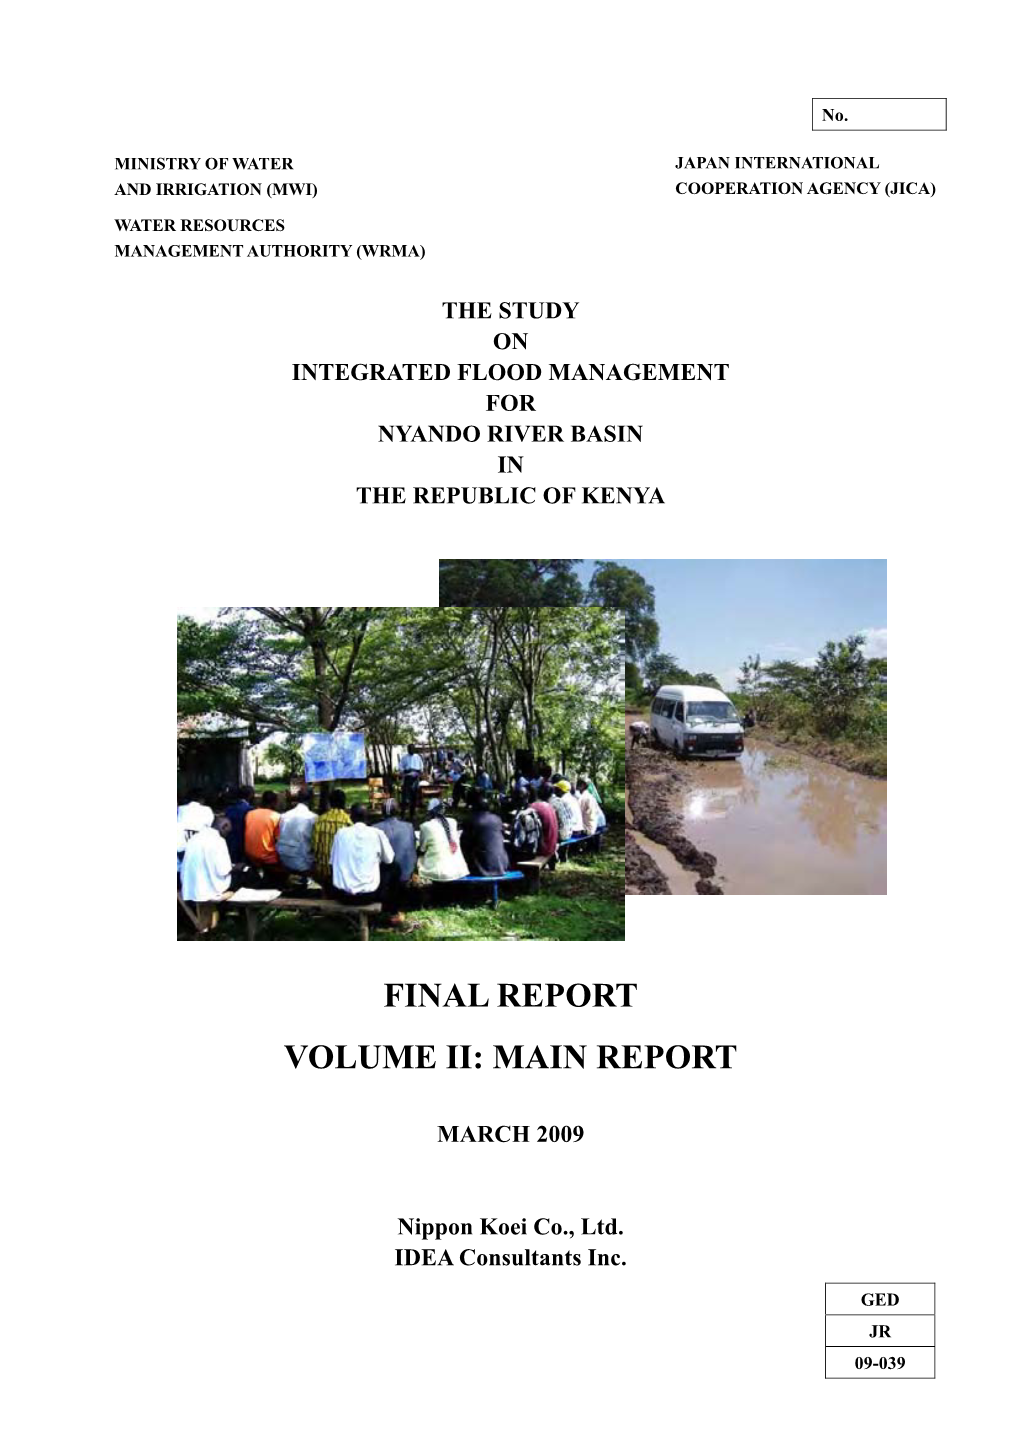 Final Report Volume Ii: Main Report